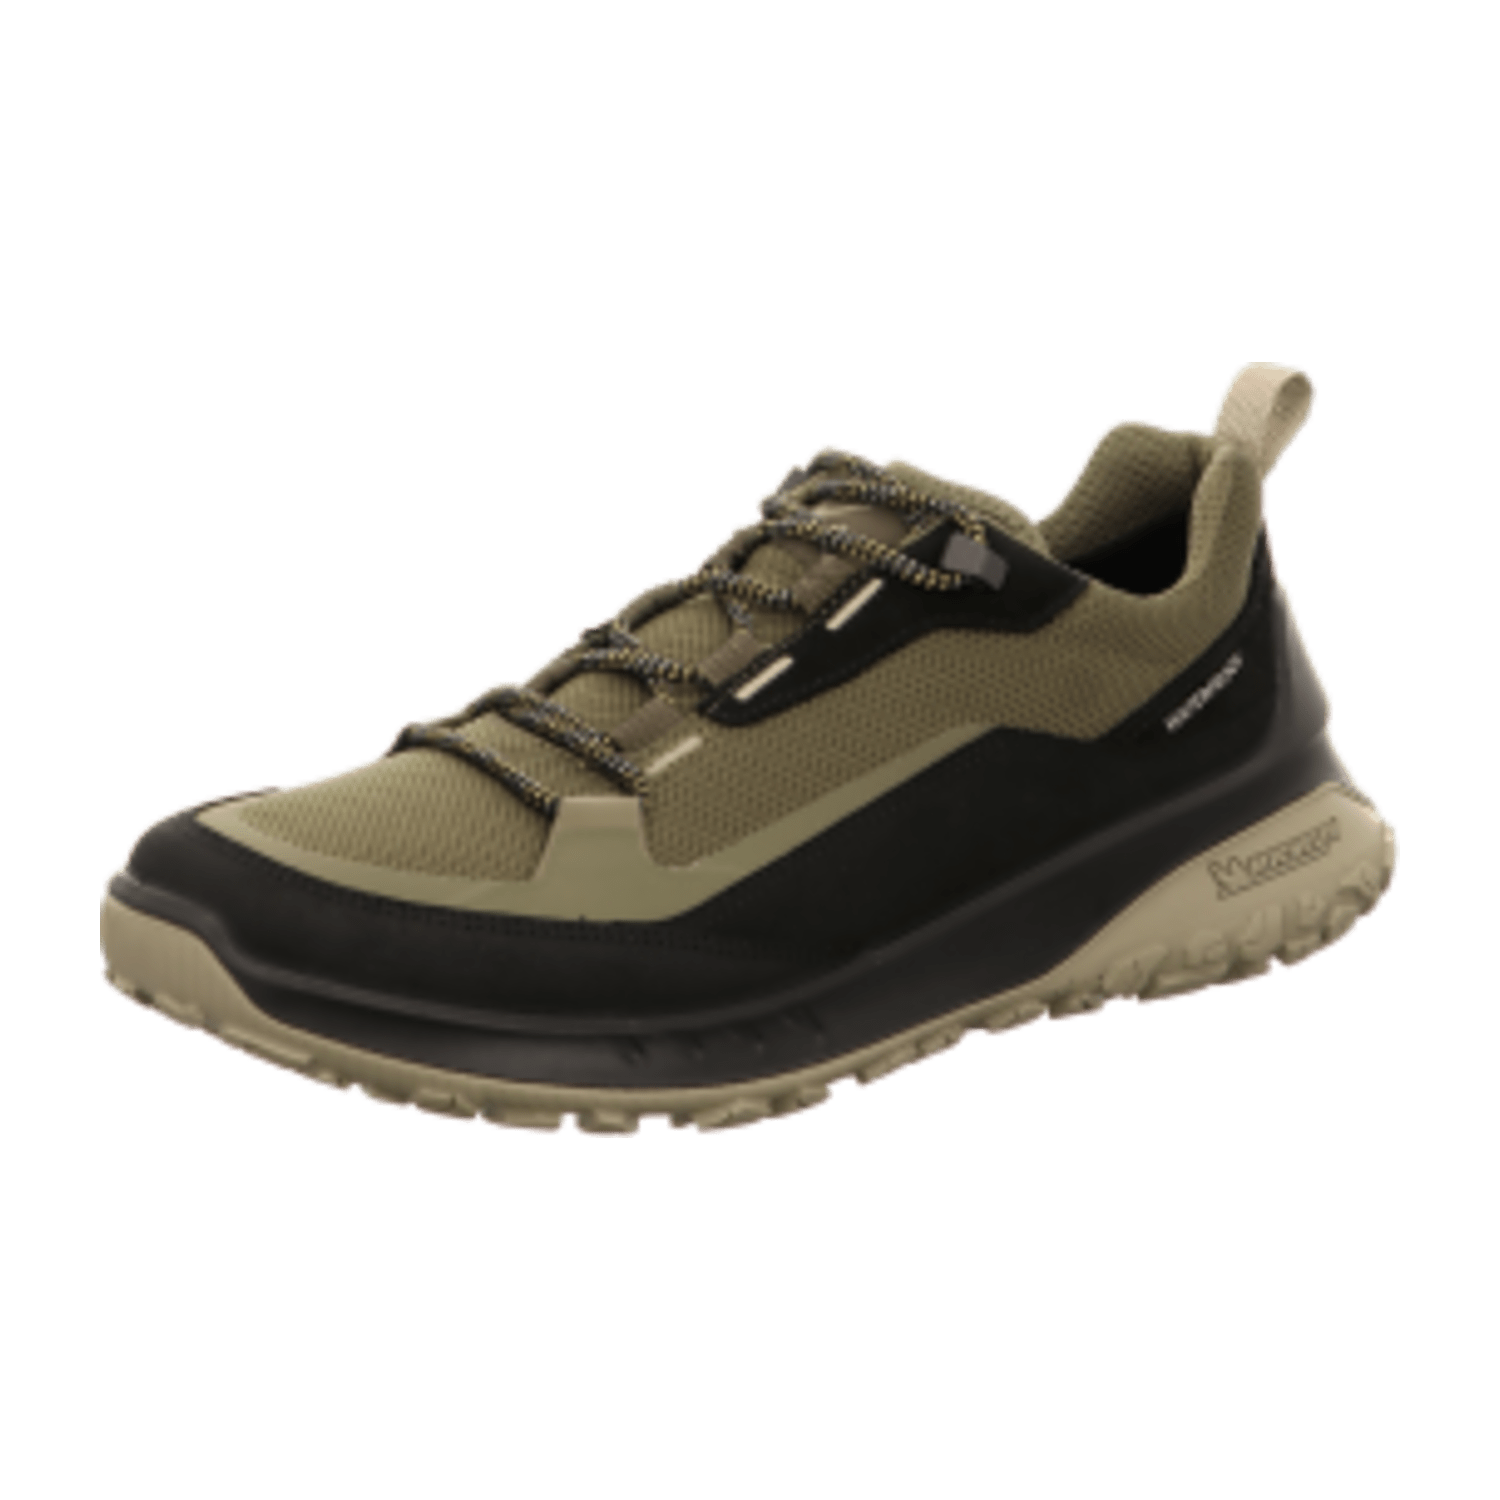 Ecco Ult-Trn Schuhe grün schwarz Waterproof 824254